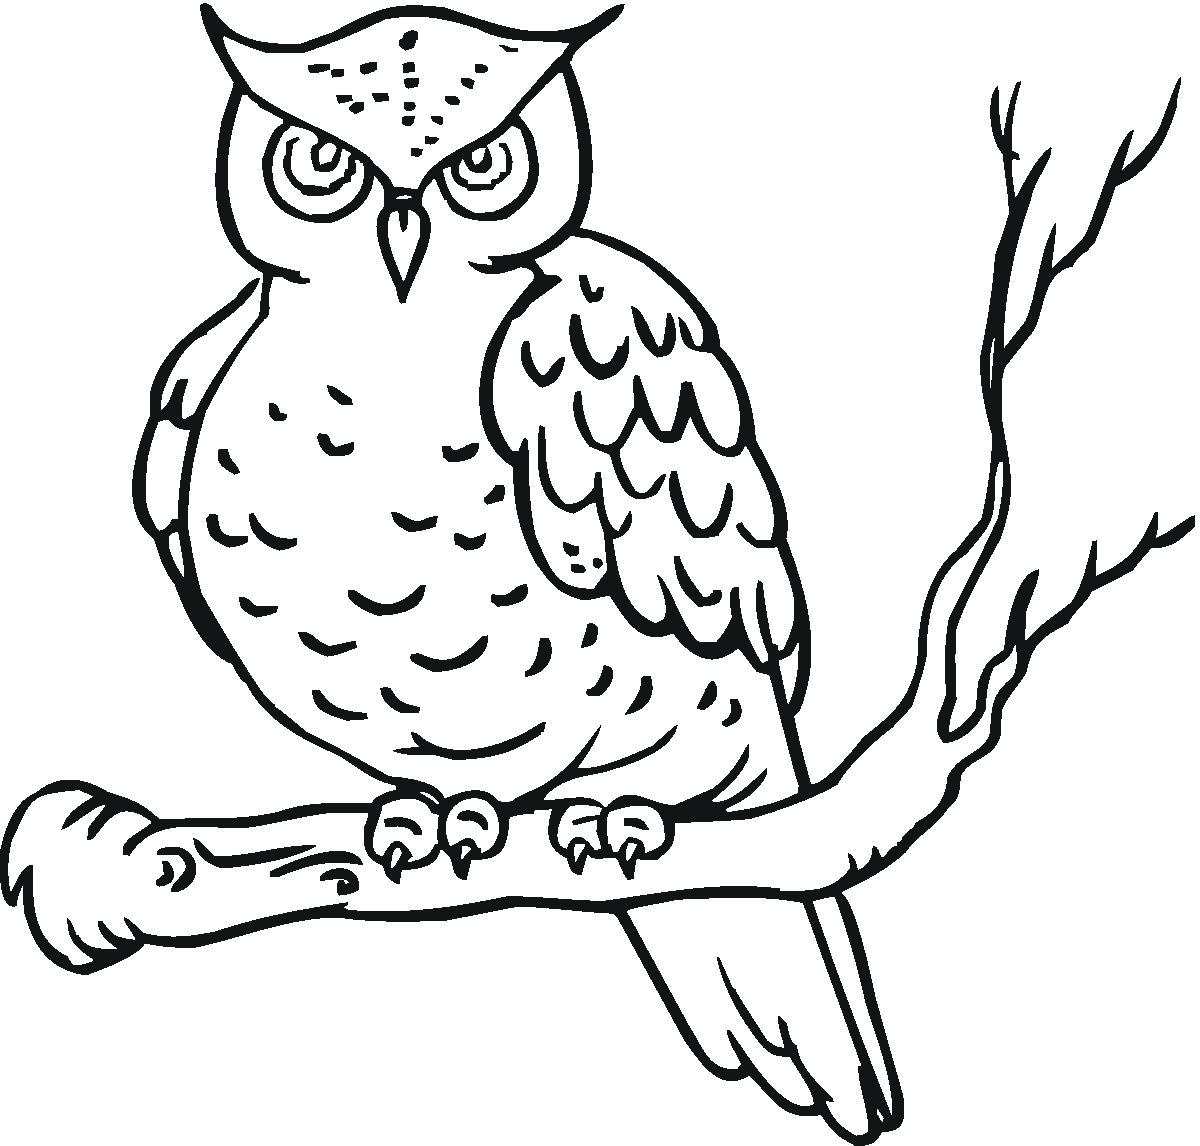 Owlet coloring #20, Download drawings